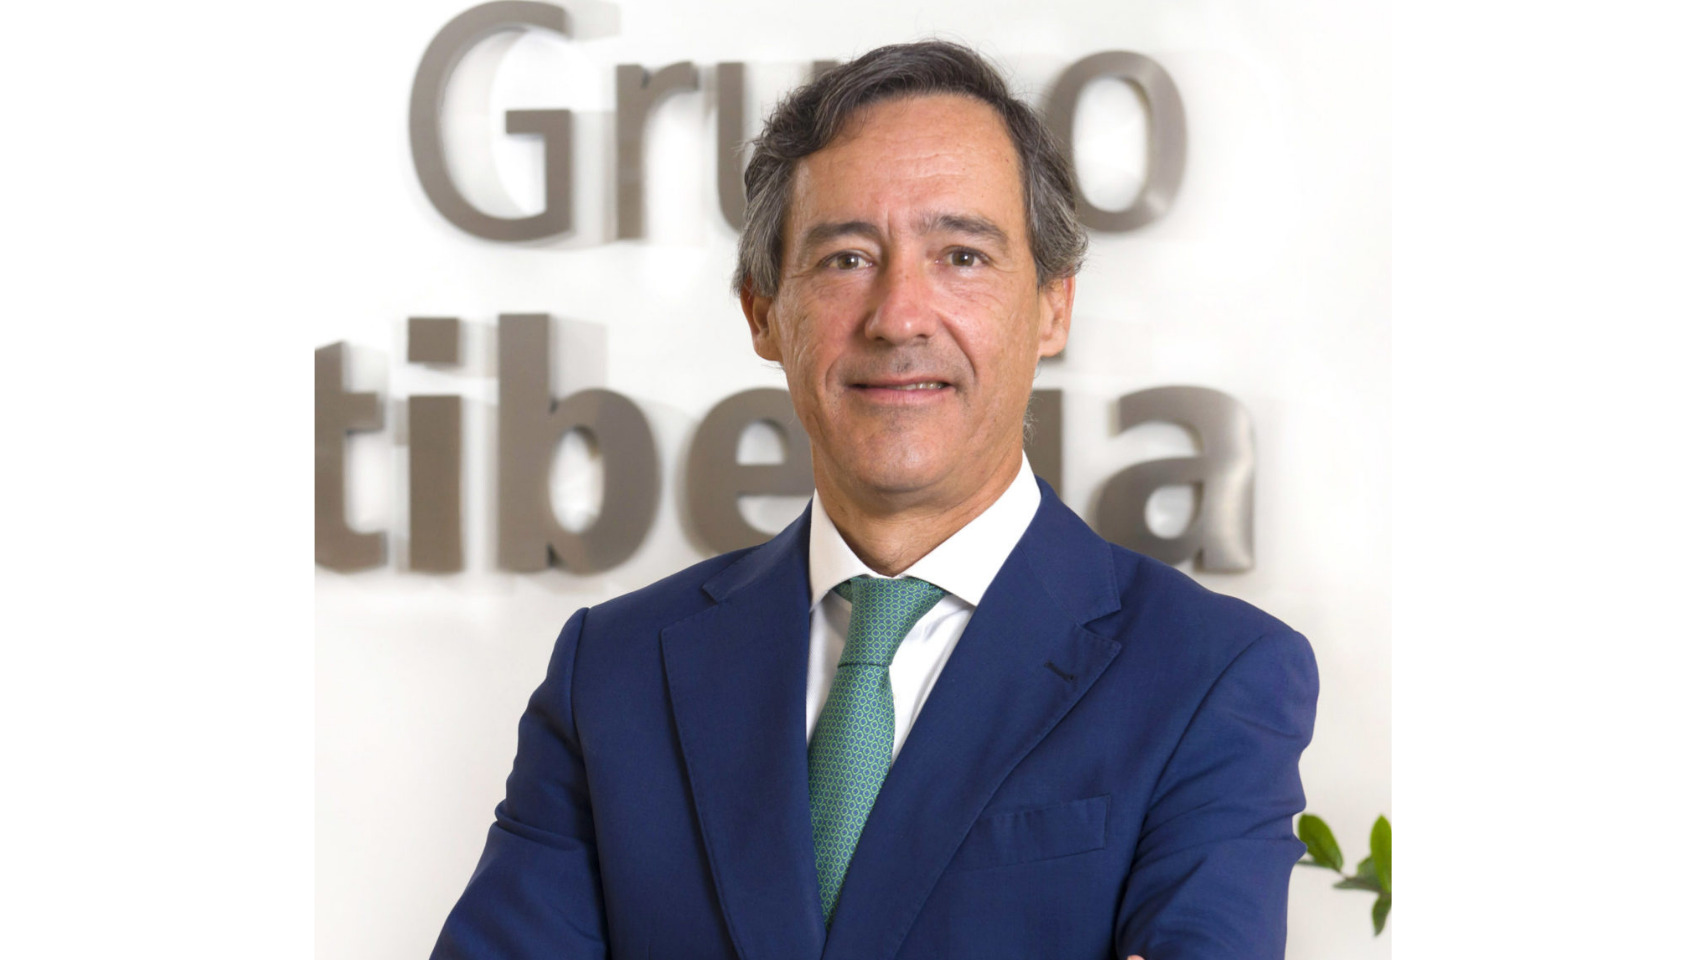 Javier Goñi